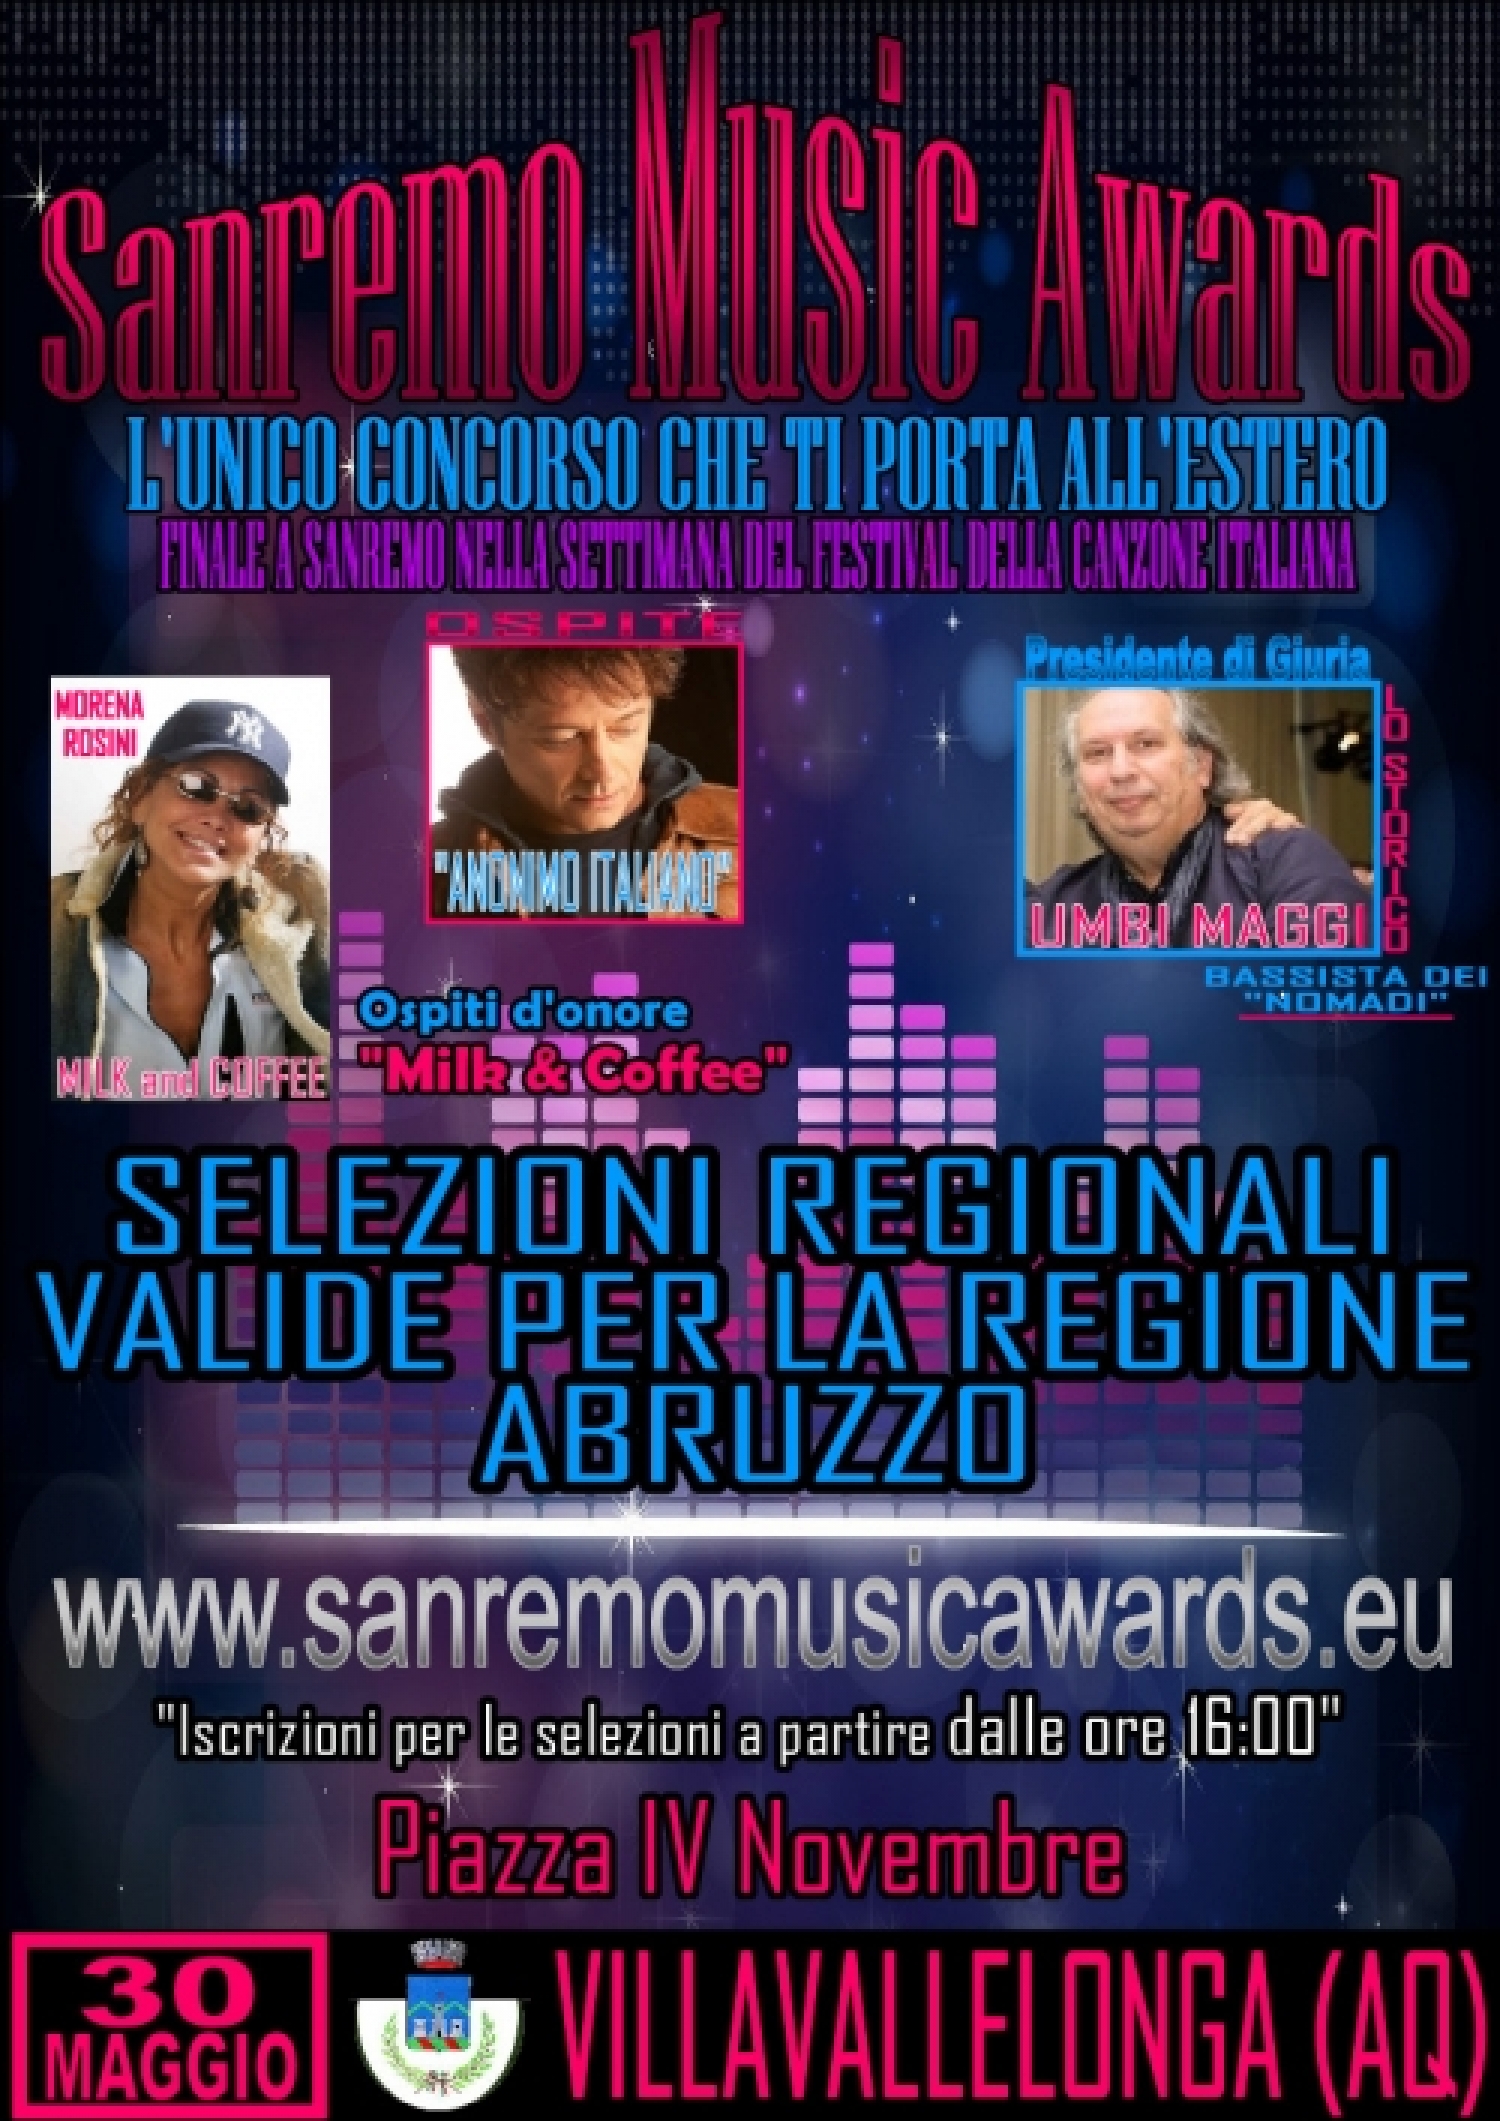 Sanremo music awards.jpg